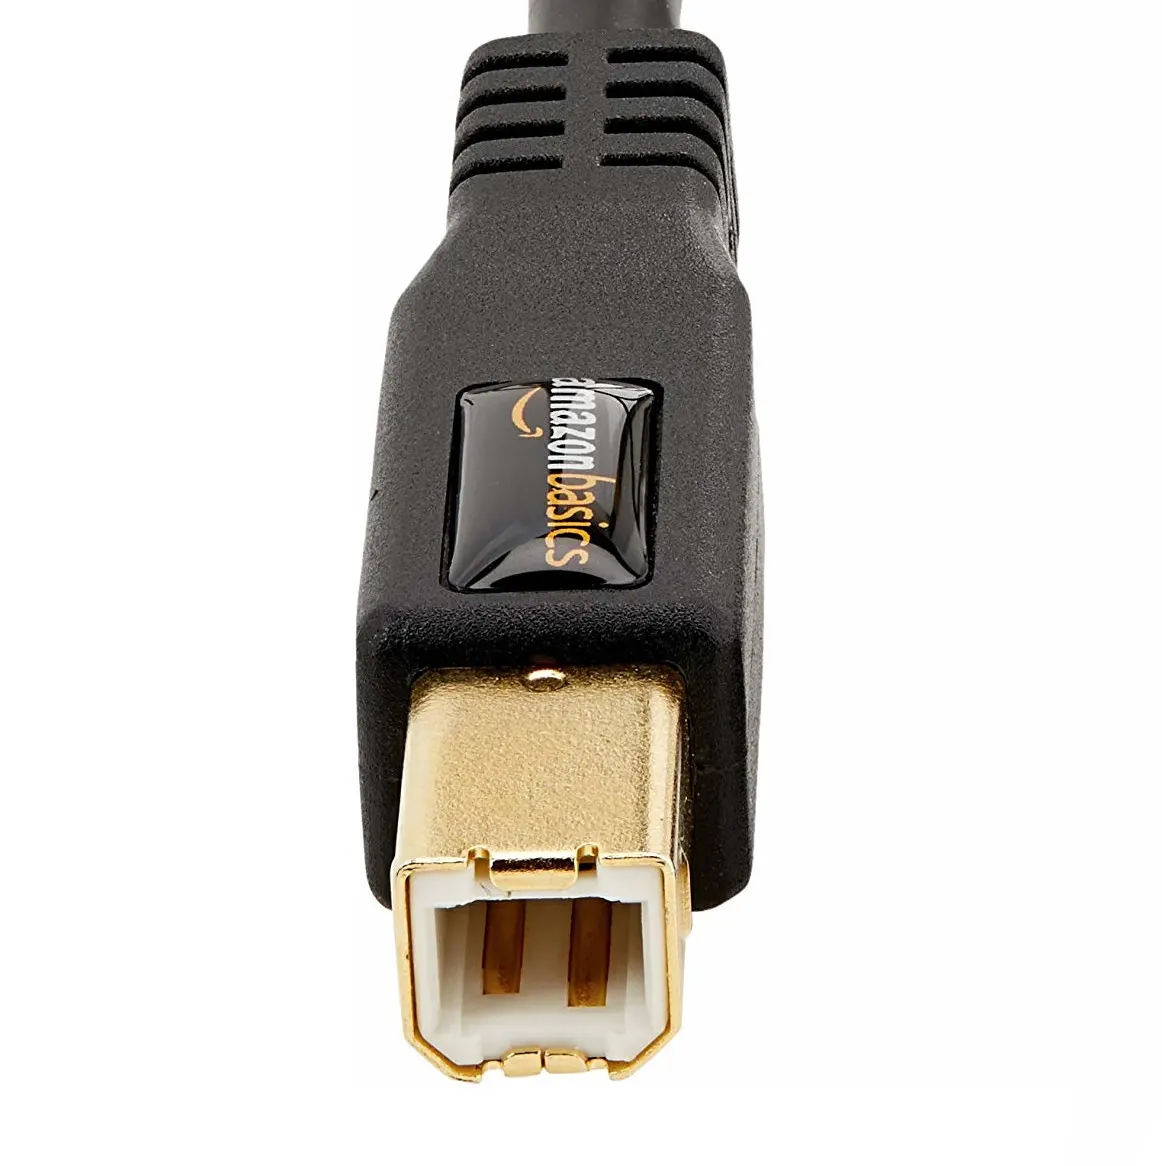 USB Type B (AmazonBasics)